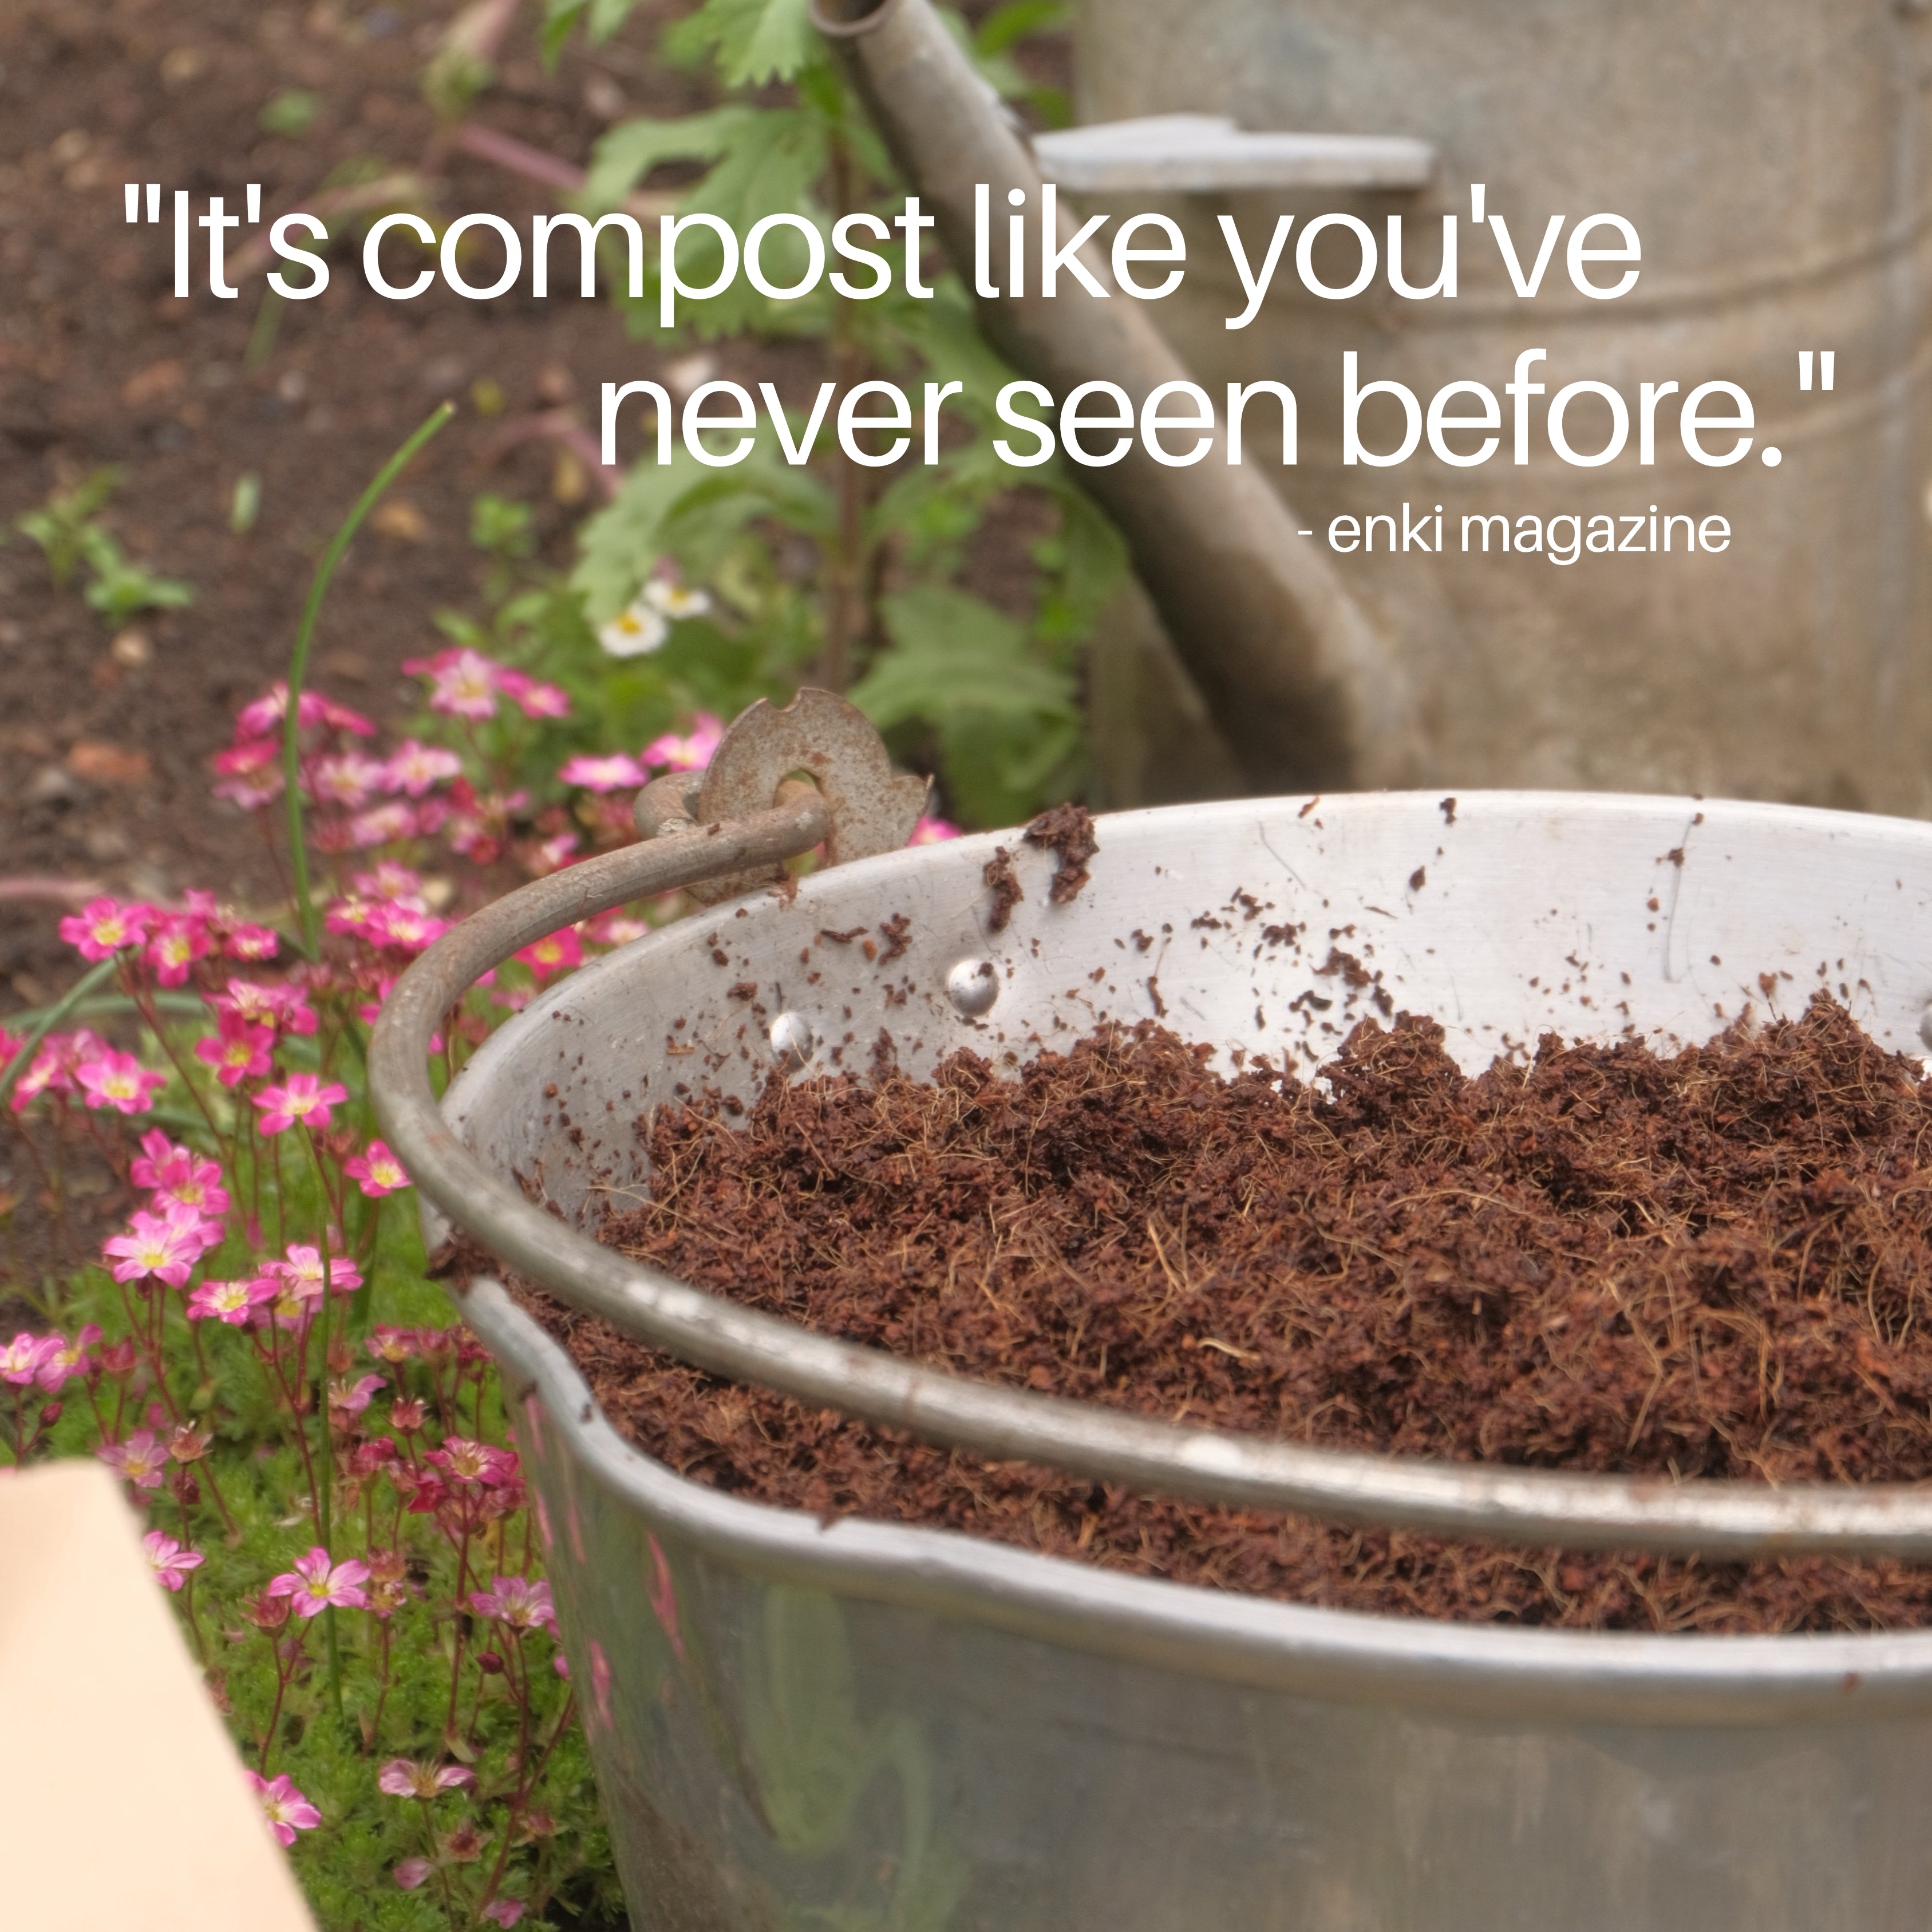 Is coir compostable?